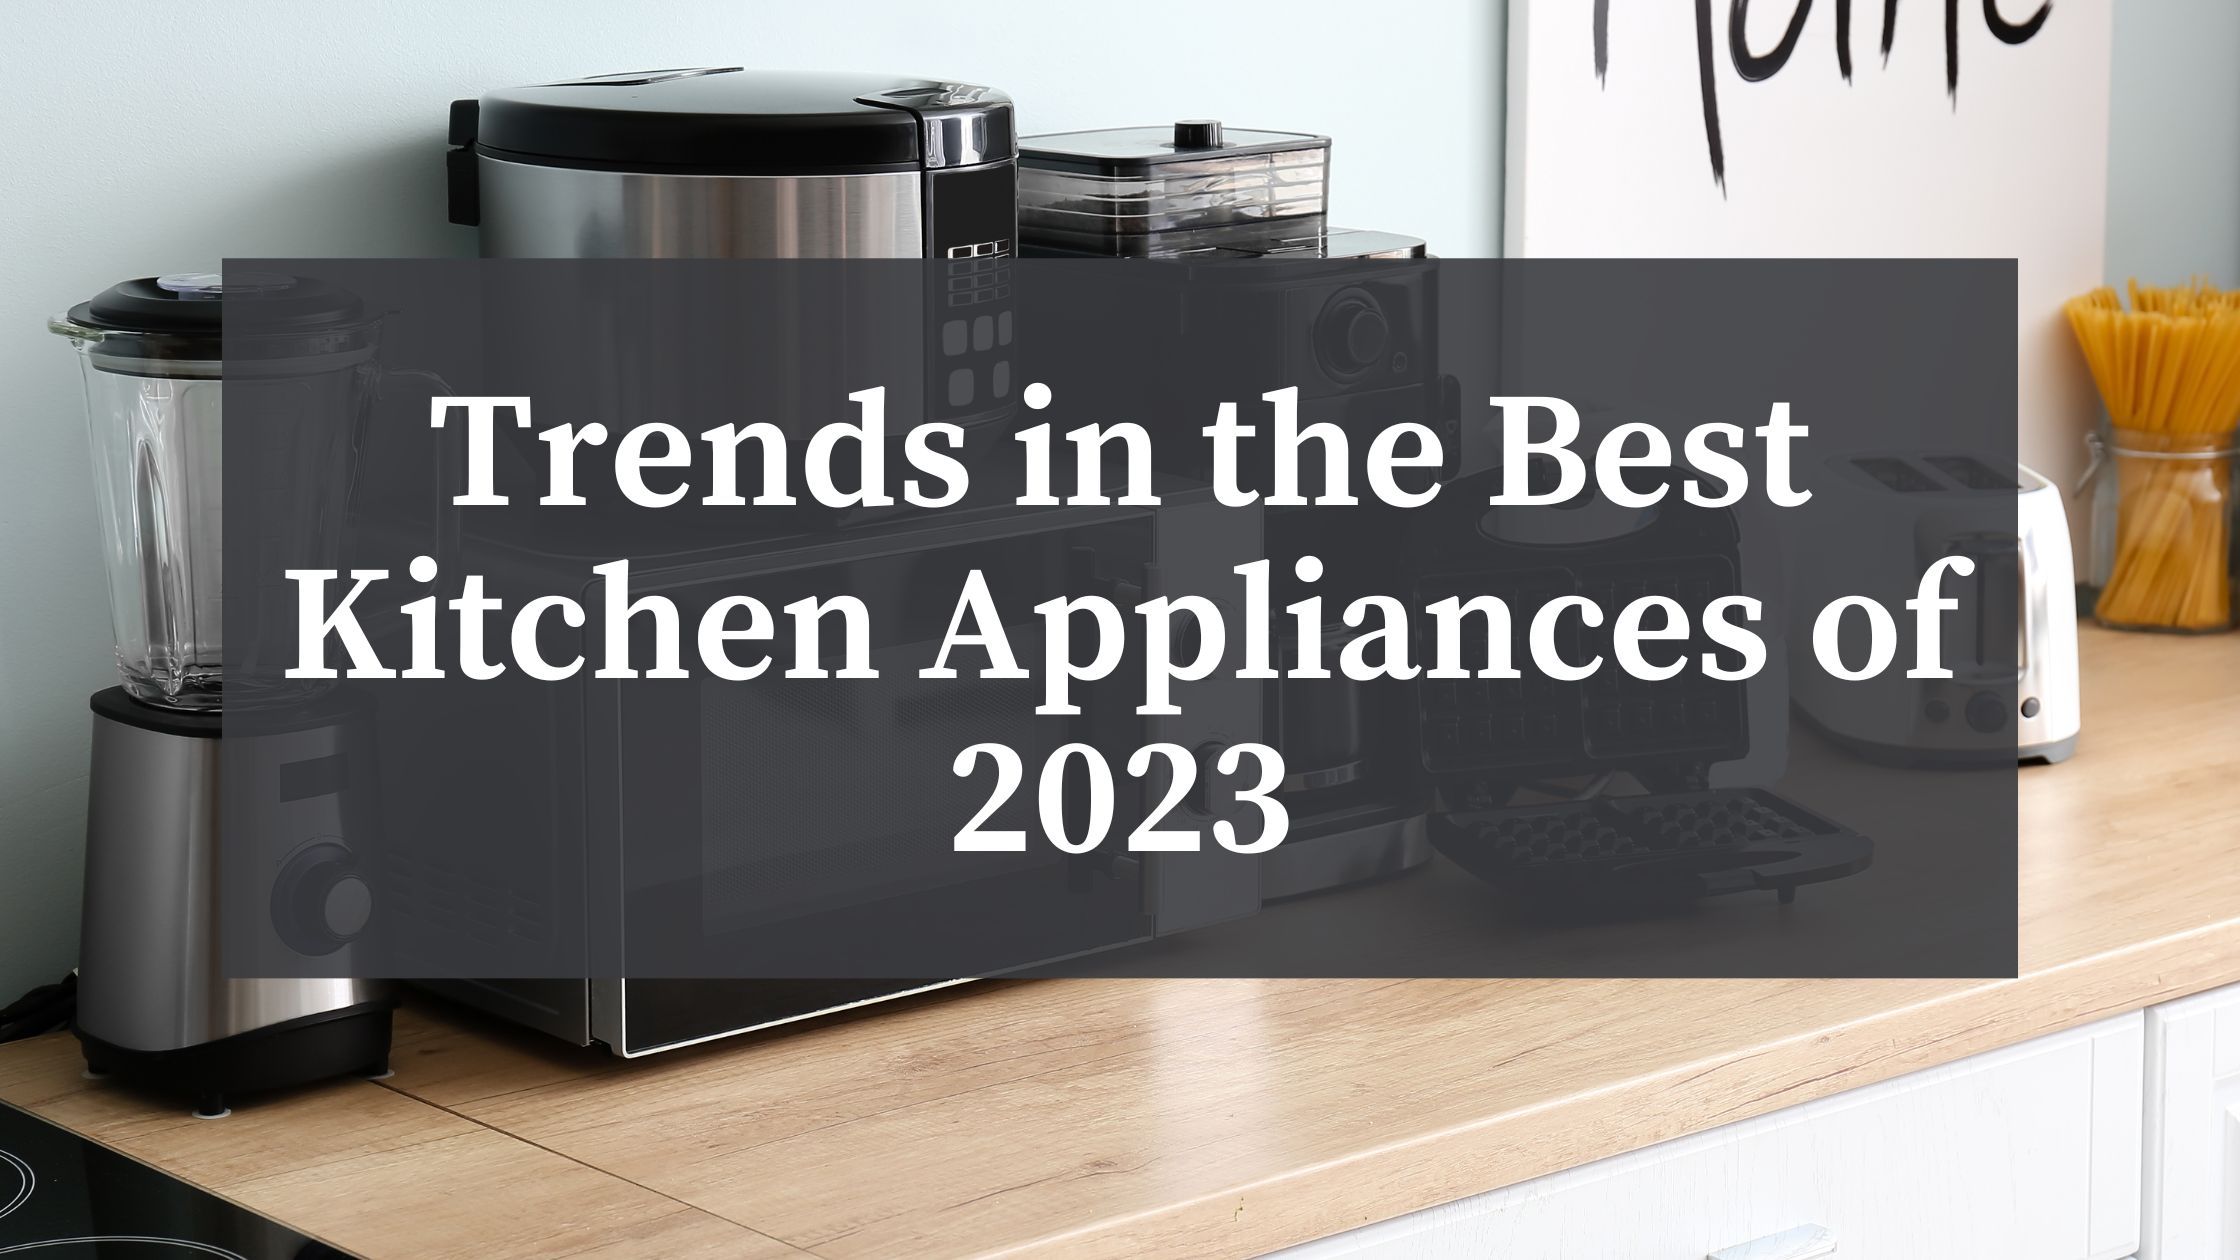 Must Have Kitchen Appliances in 2023